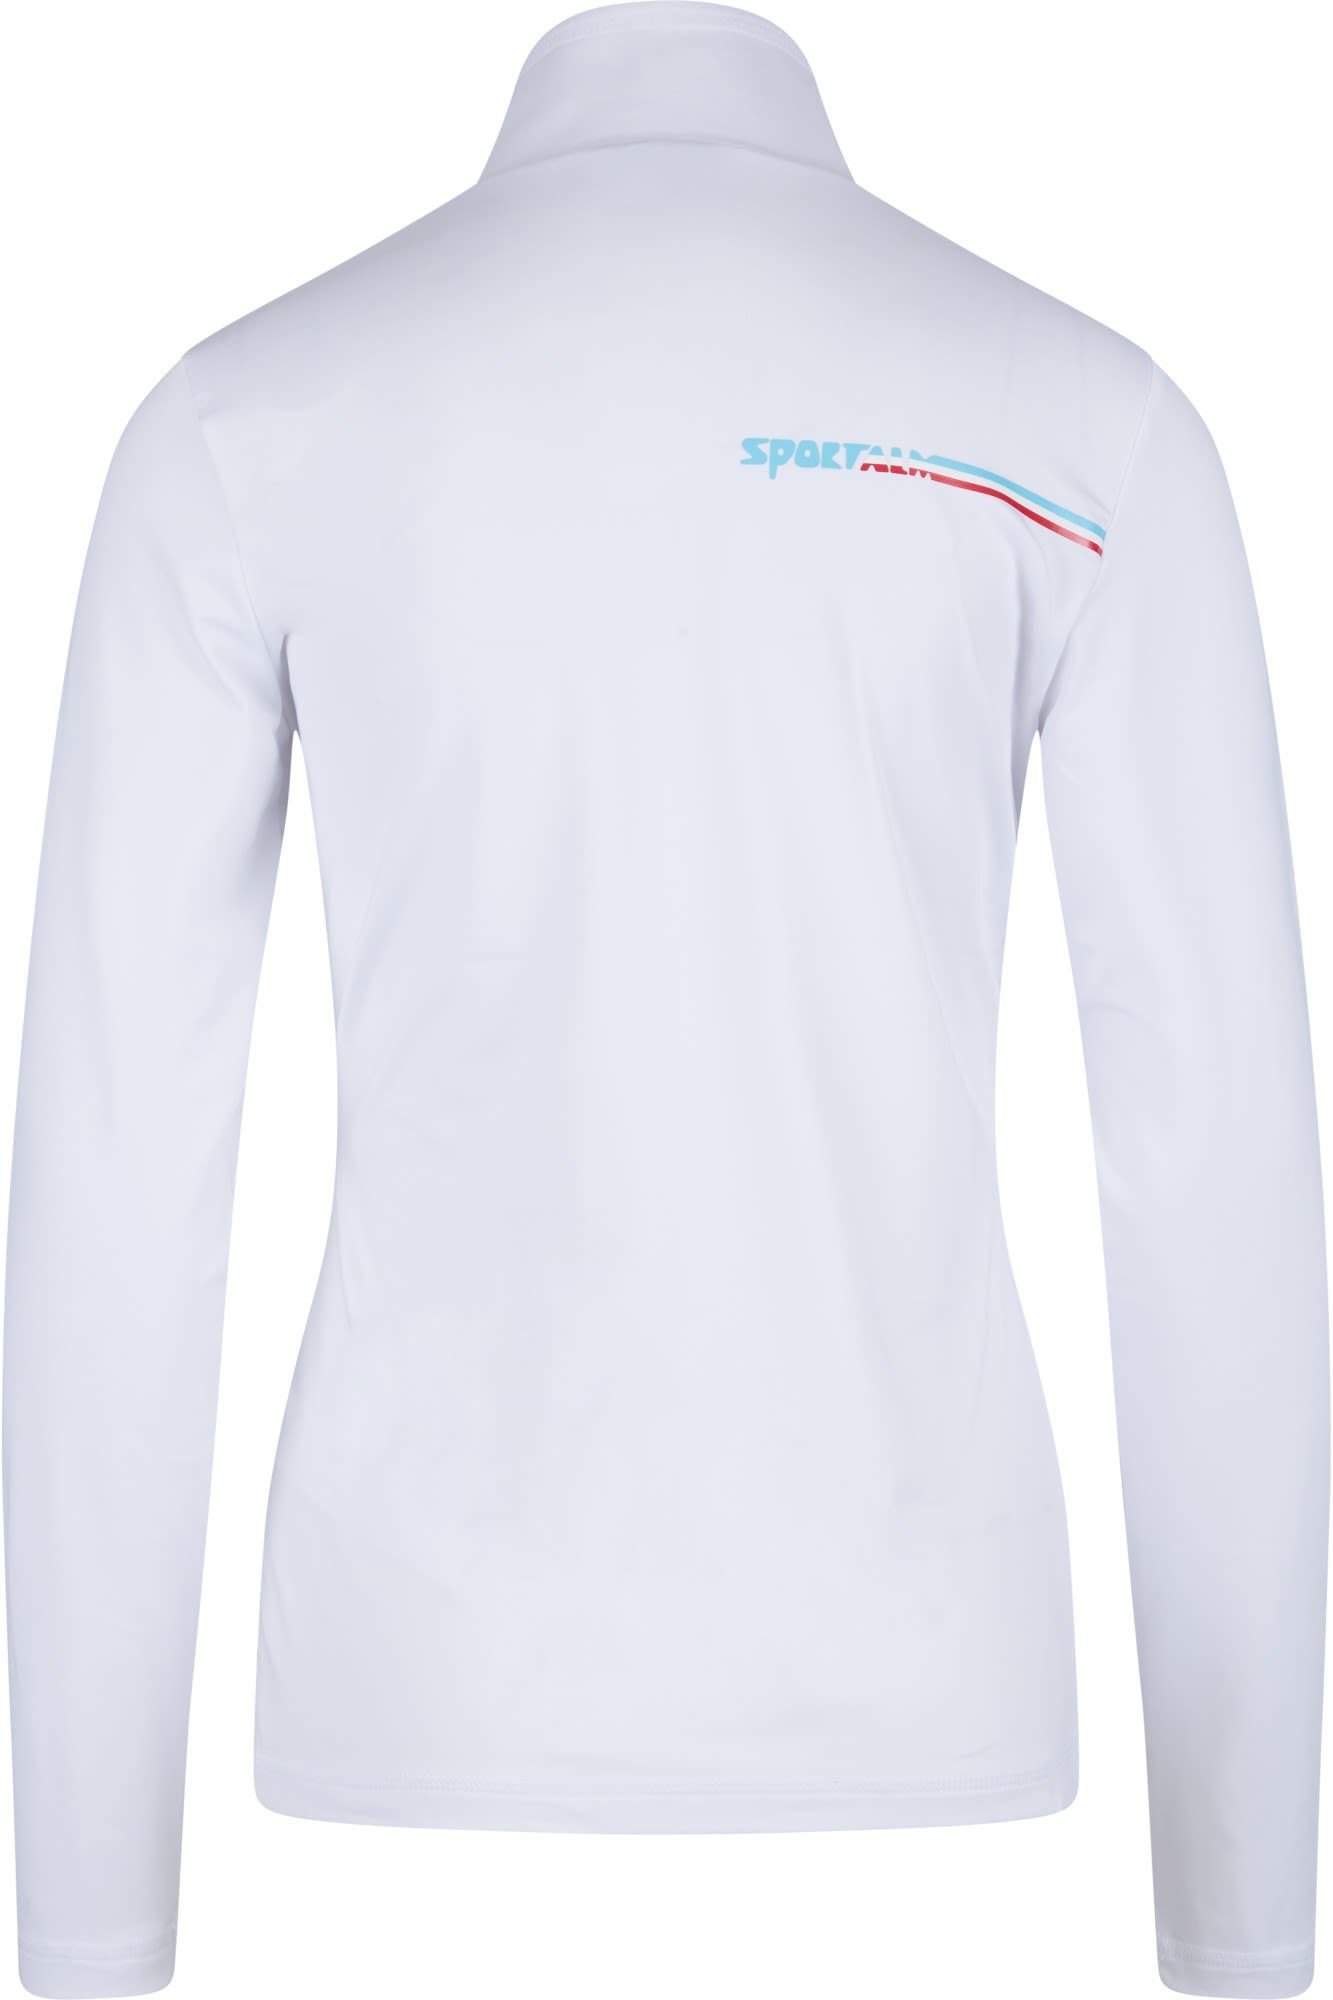 Langarm-Shirt Damen 8 White Optical Longsleeve Langarmshirt Sportalm Kitzbühel W Sportalm